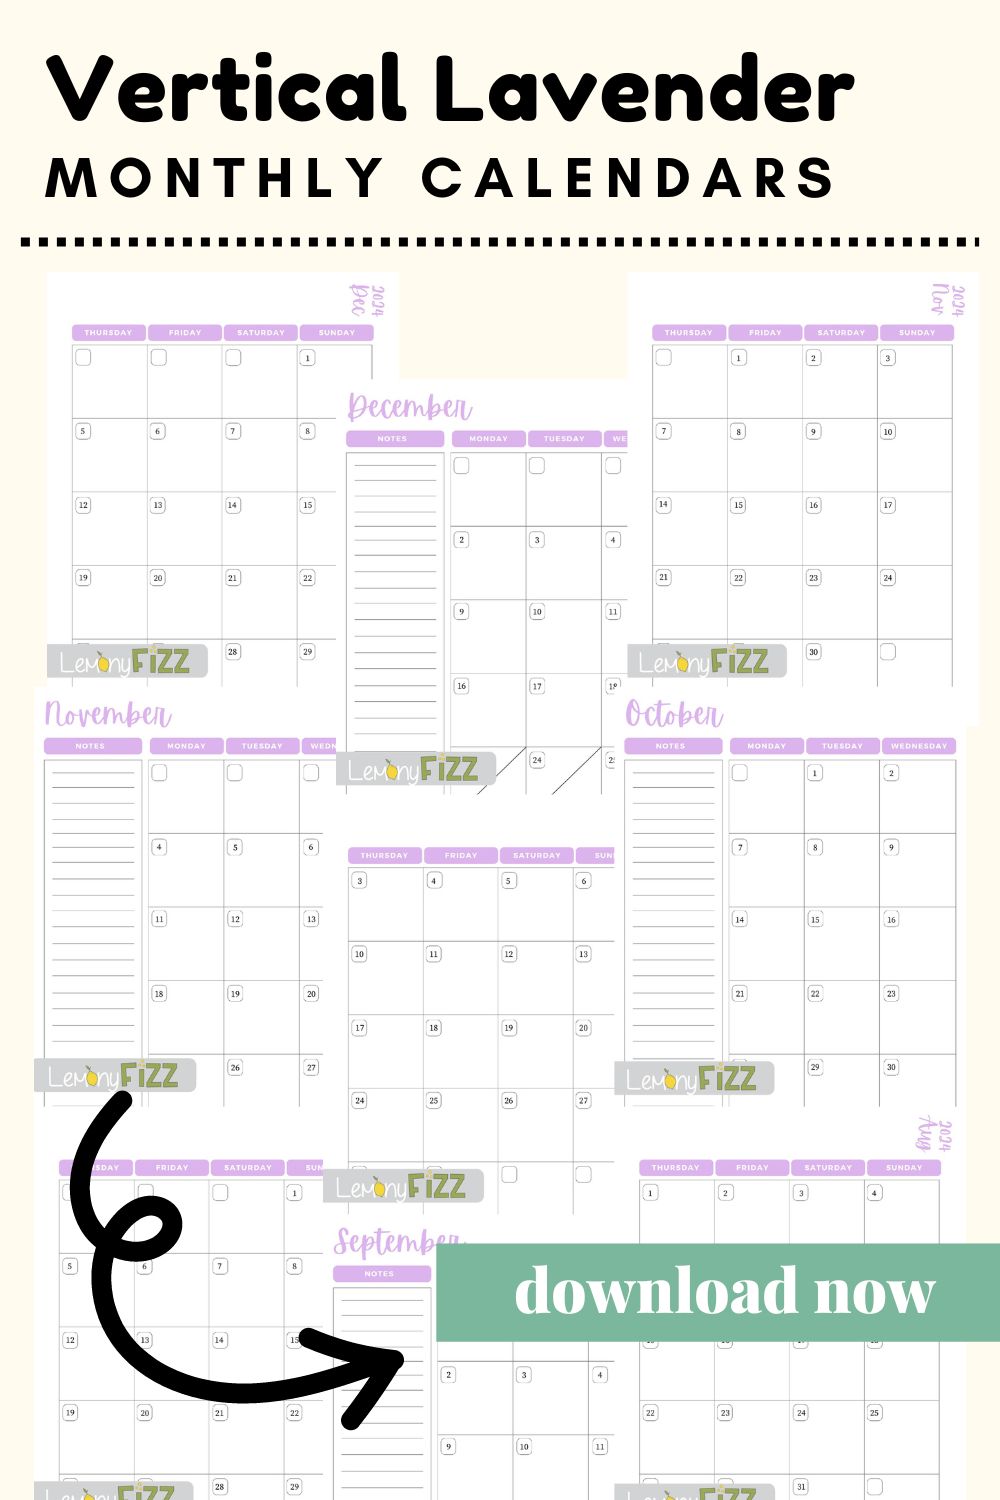 Vertical Lavender Calendar